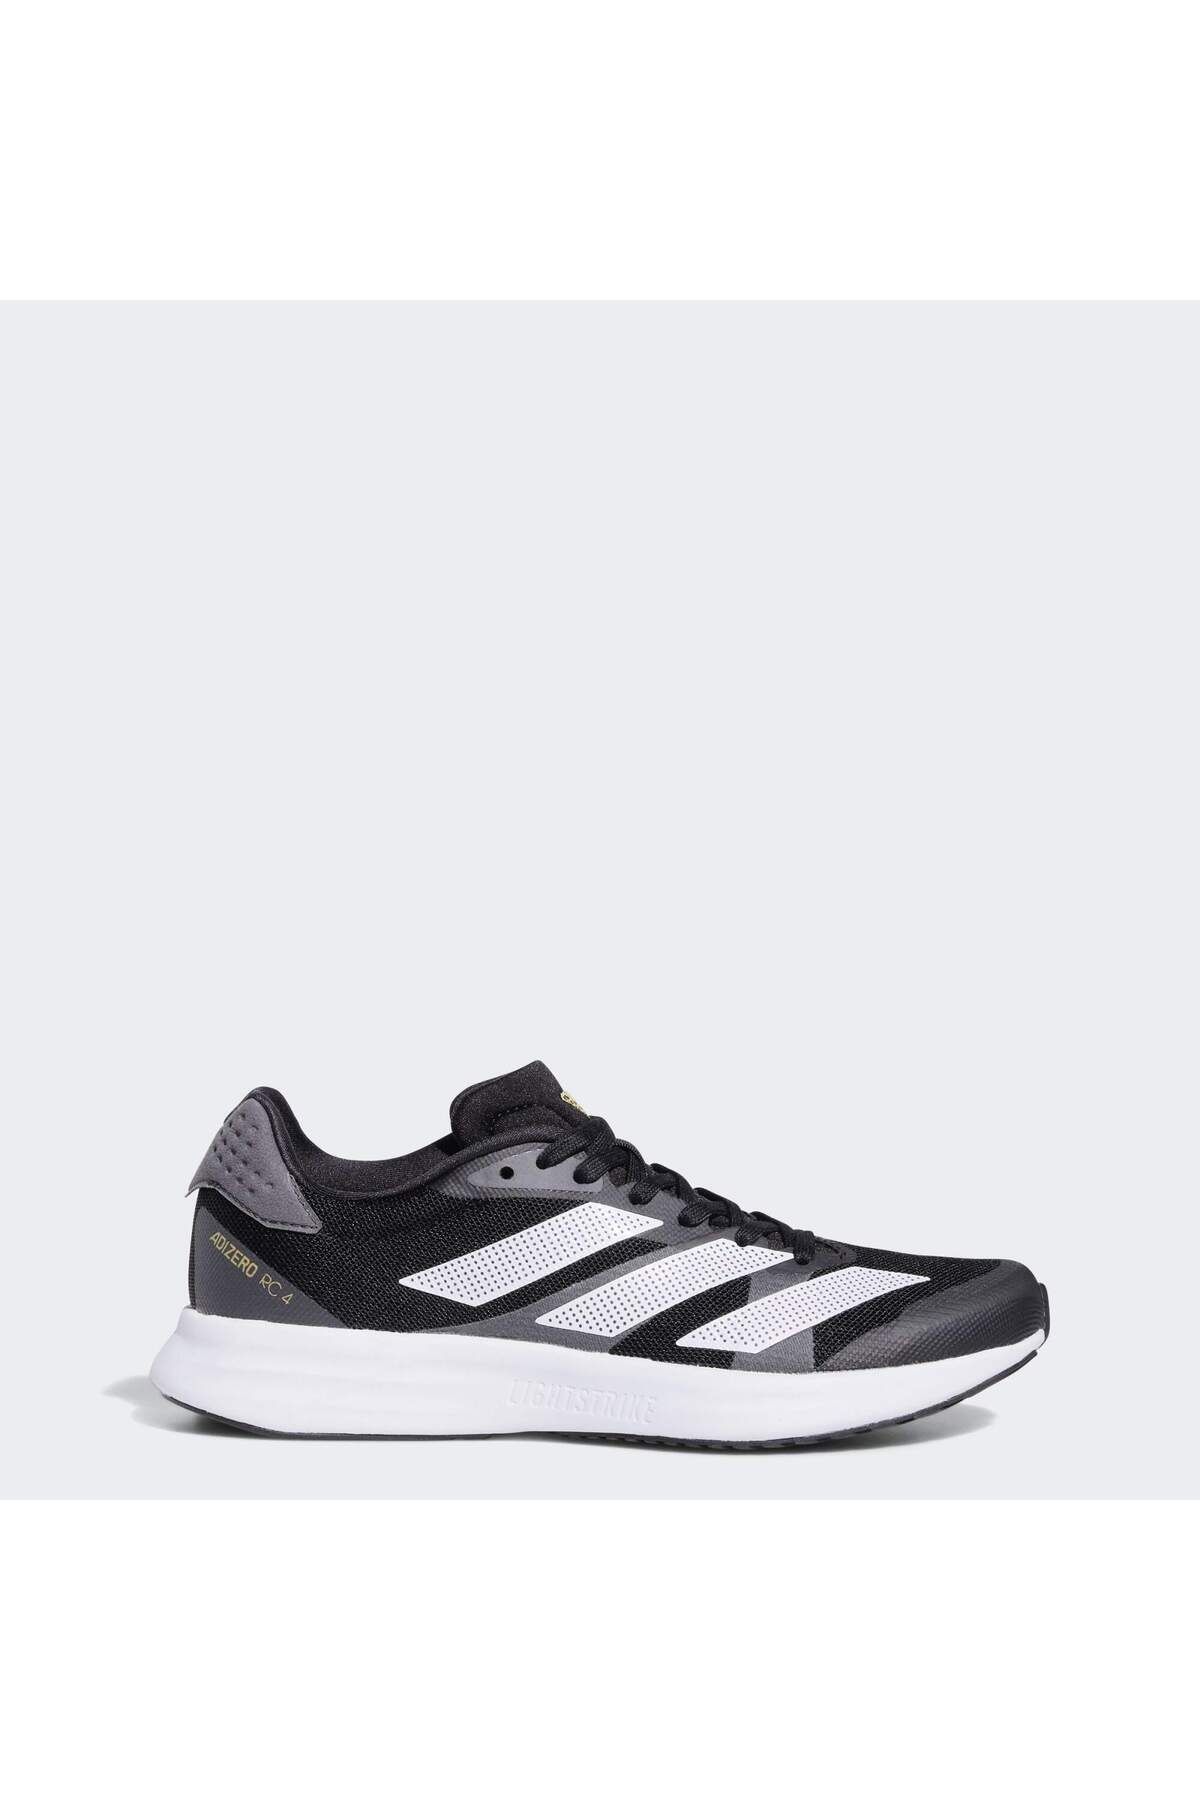 adidas Adizero Rc 4 Running Shoes Kadın Koşu Ayakkabısı Gx8157